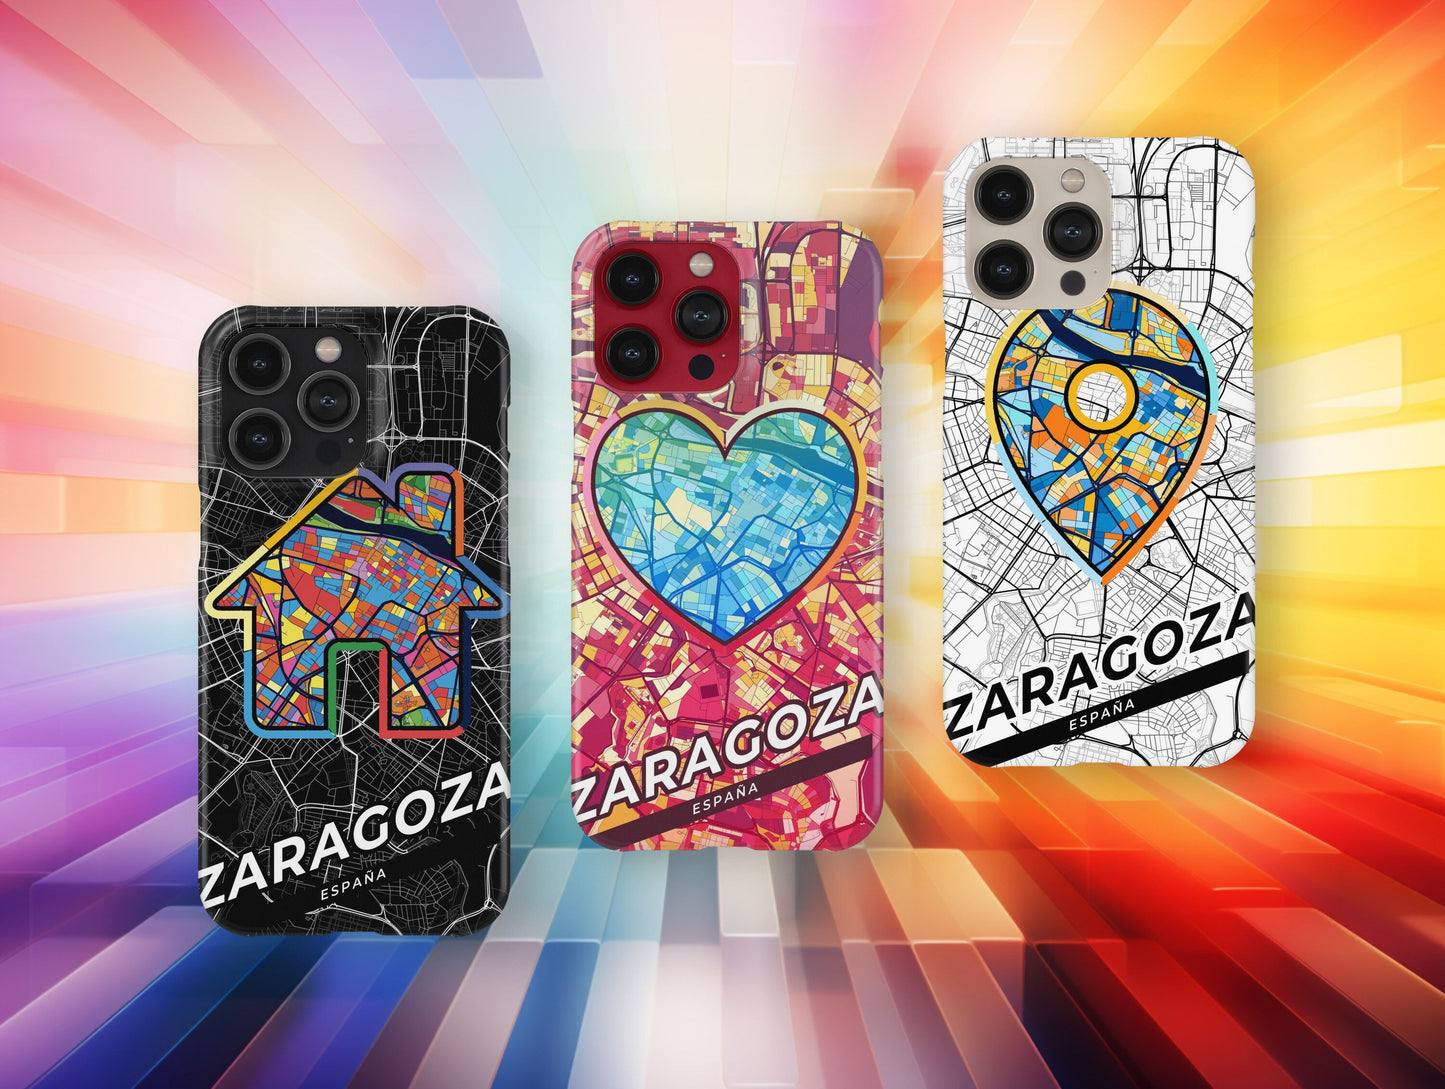 Zaragoza Spain slim phone case with colorful icon